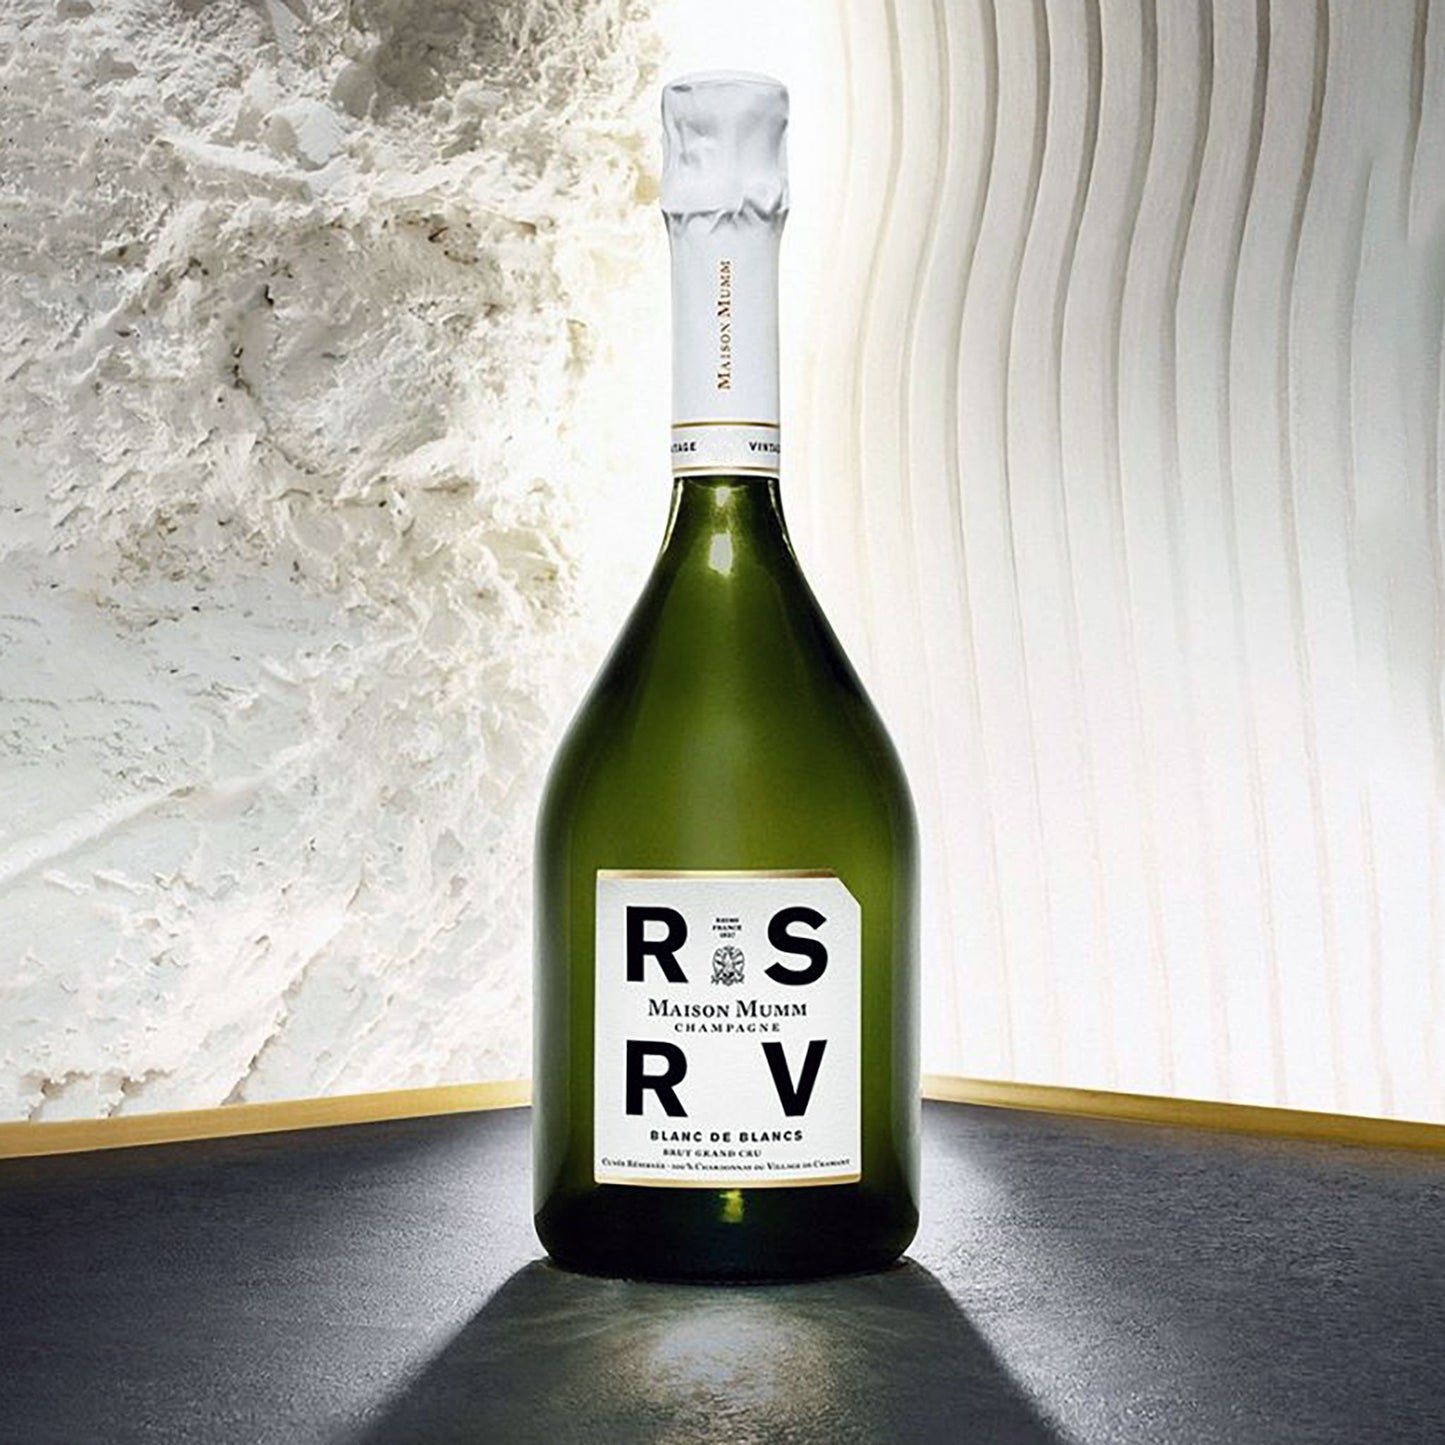 Maison Mumm RSRV Blanc de Blancs 2015